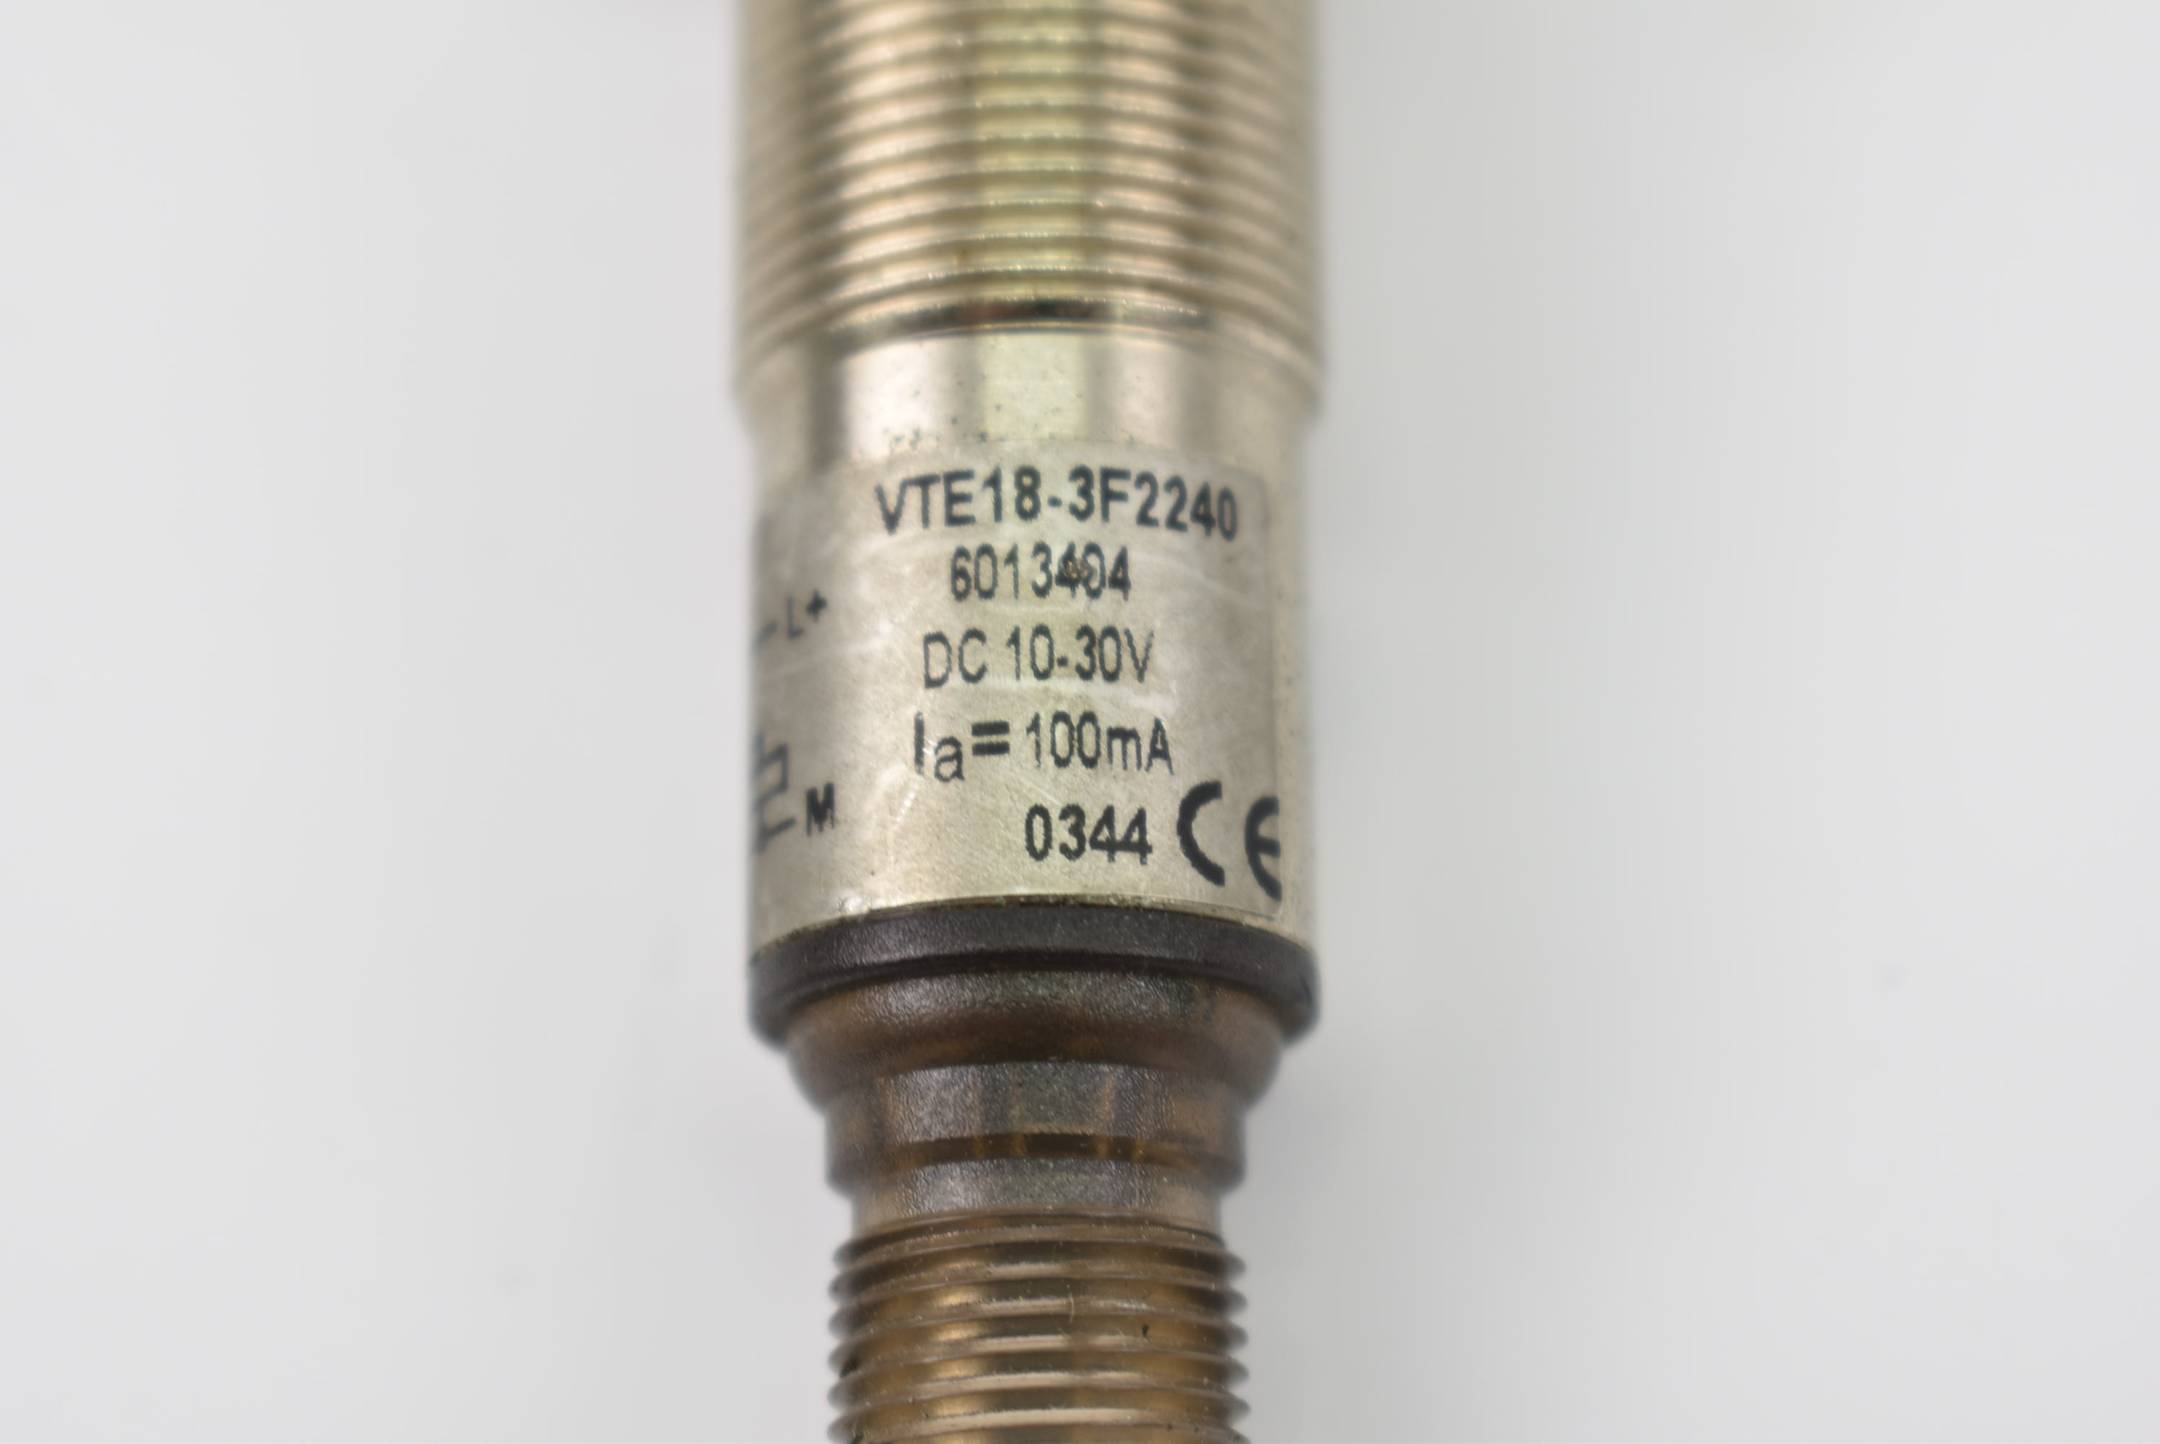 Sick fotoelektrischer Schalter DC10-30V 100mA VTE18-3F2240 ( 6013404 )